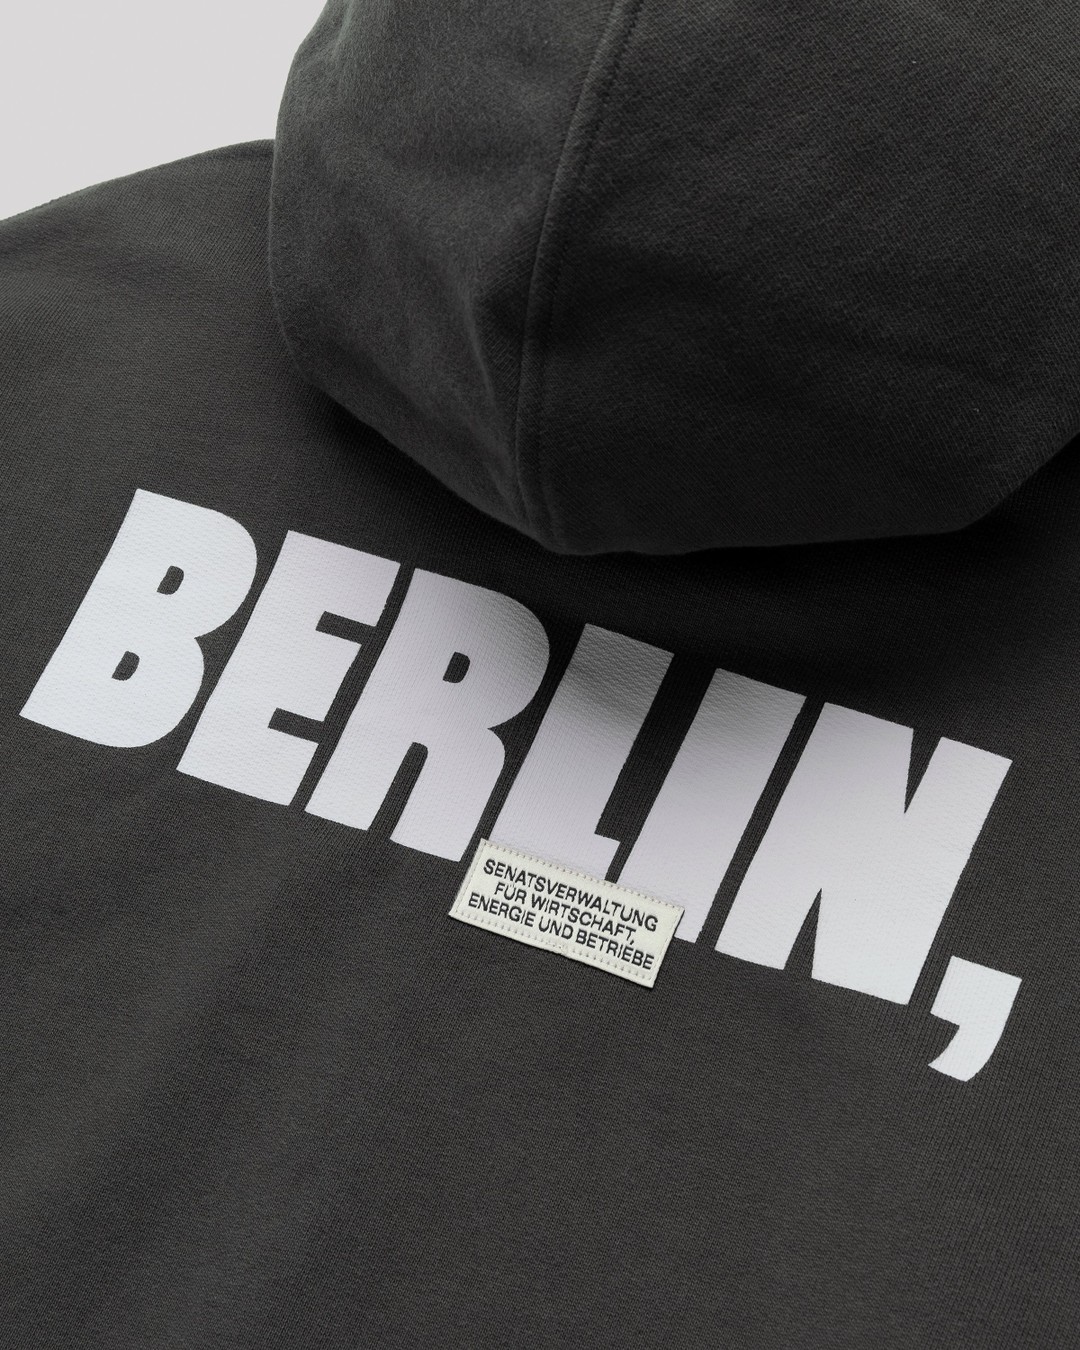 Highsnobiety – BERLIN, BERLIN 3 Zip Hoodie Black - Zip-Up Sweats - Black - Image 3